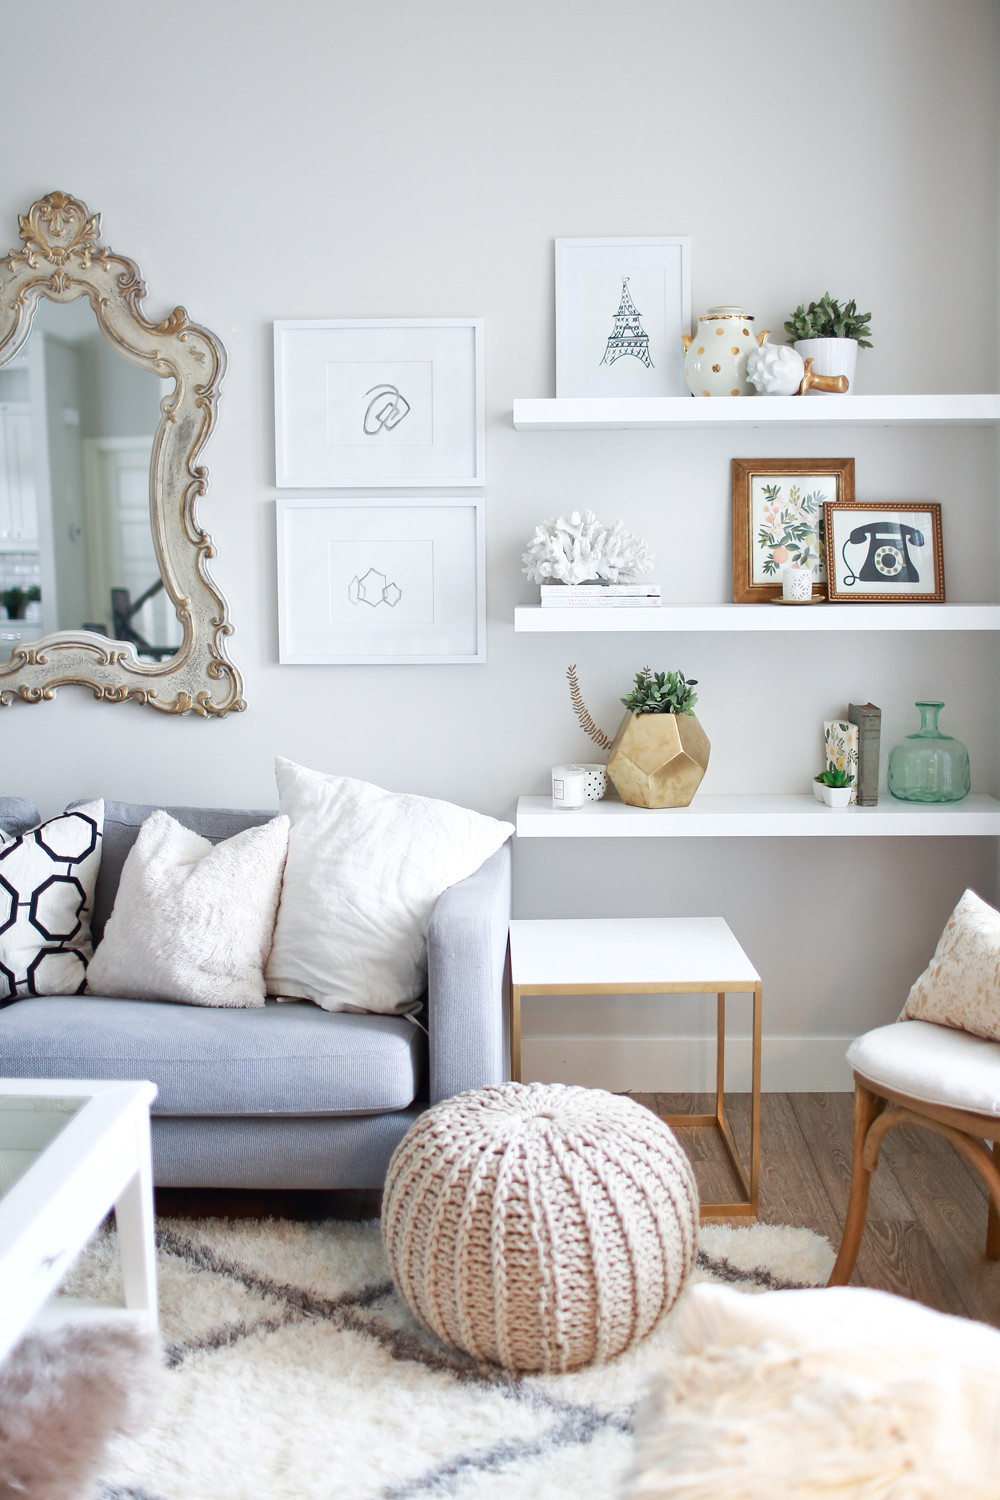 Decorative Rugs For Living Room
 IKEA Shag Rug Options – HomesFeed